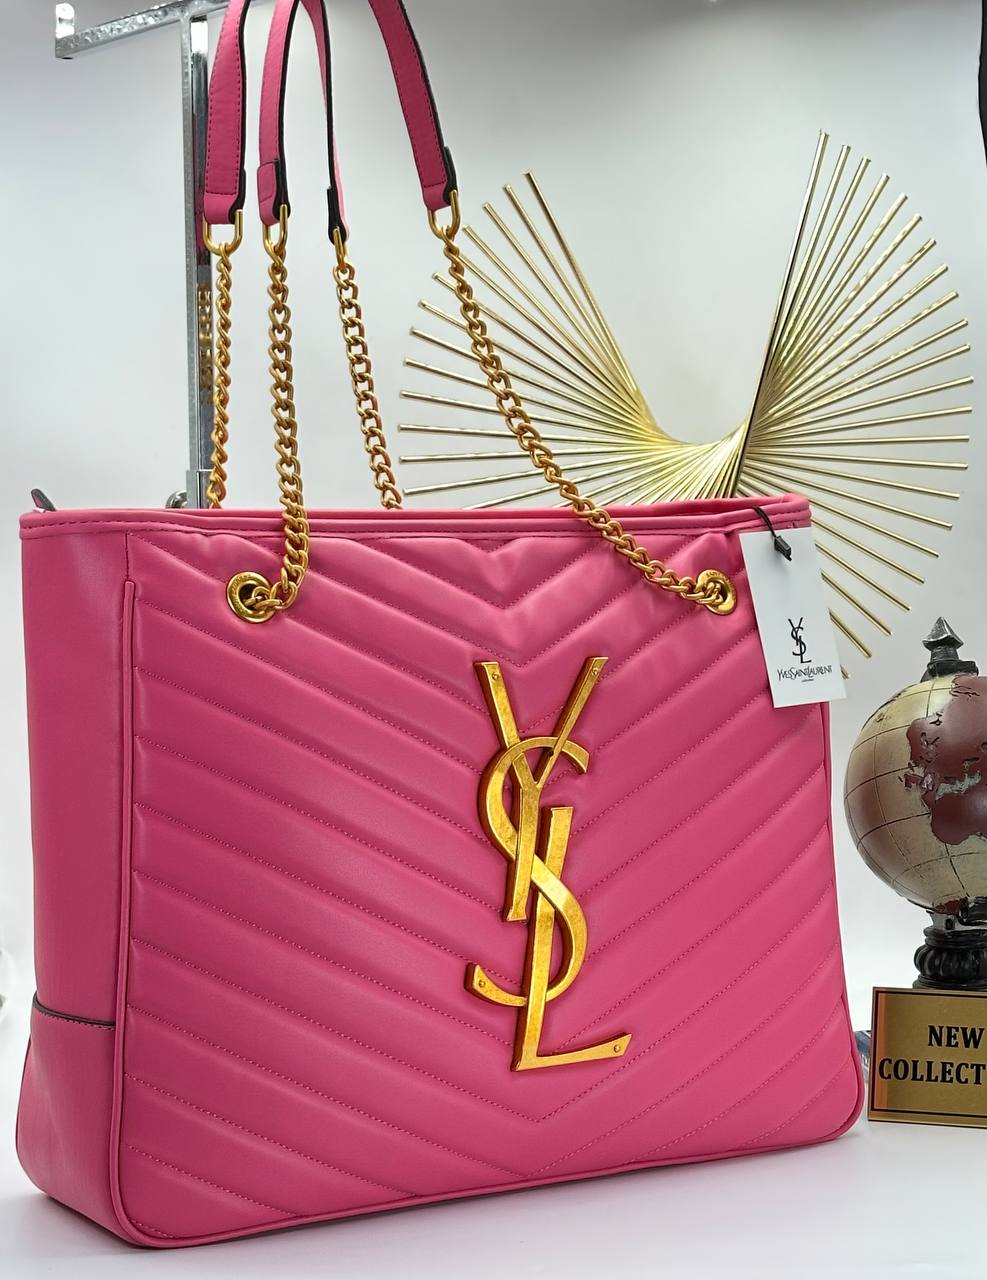 pink bag, pink bags, pink wallet, pink tote bag, pink chanel bag, pink designer bag